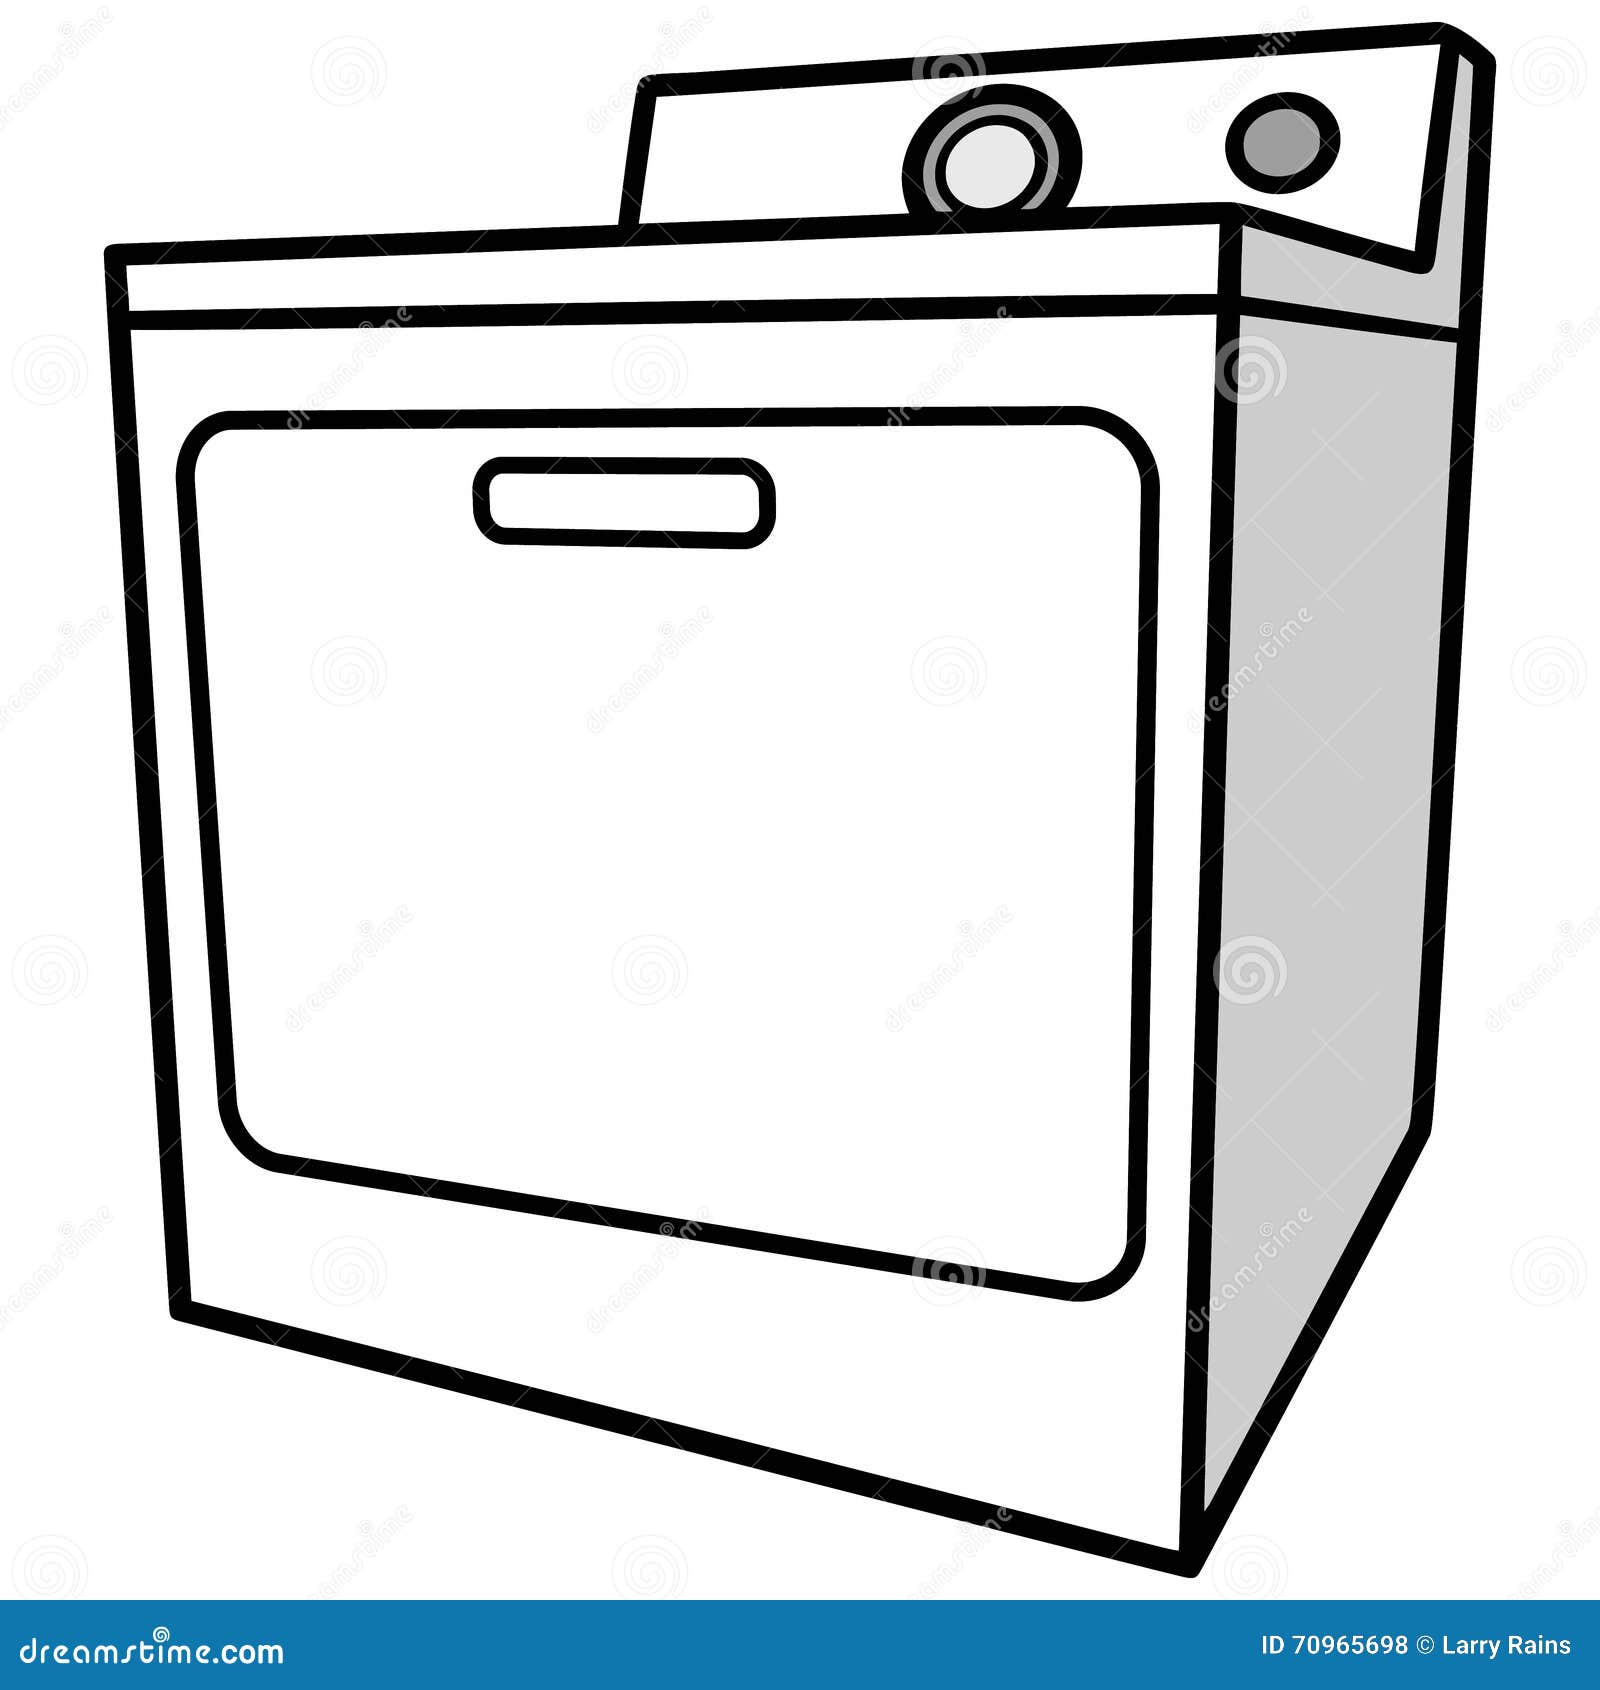 clipart clothes dryer - photo #21